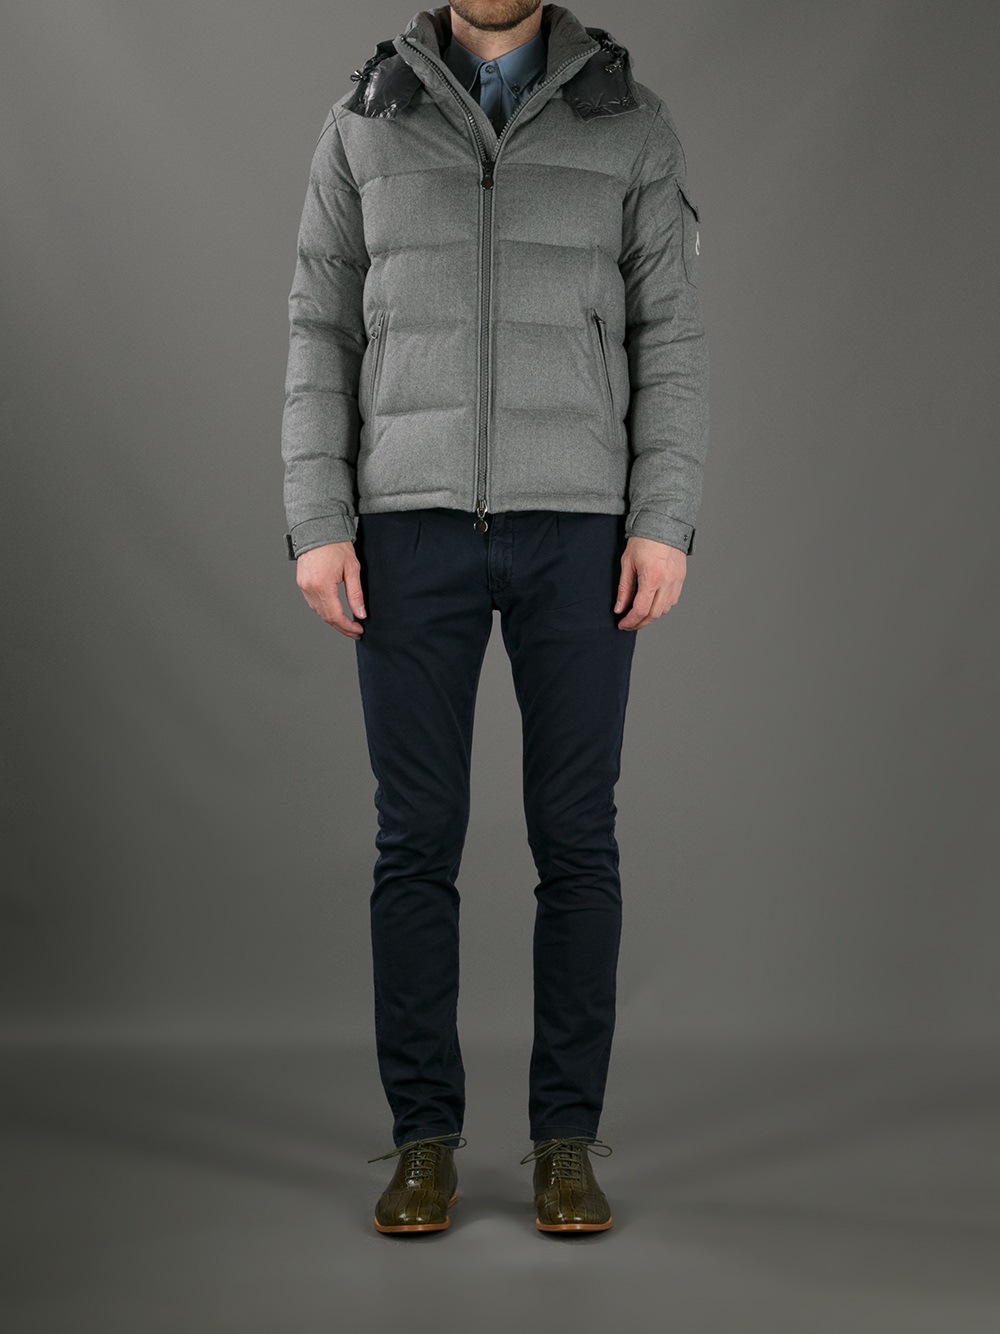 Moncler Montgenevre Padded Jacket in Grey (Gray) for Men - Lyst